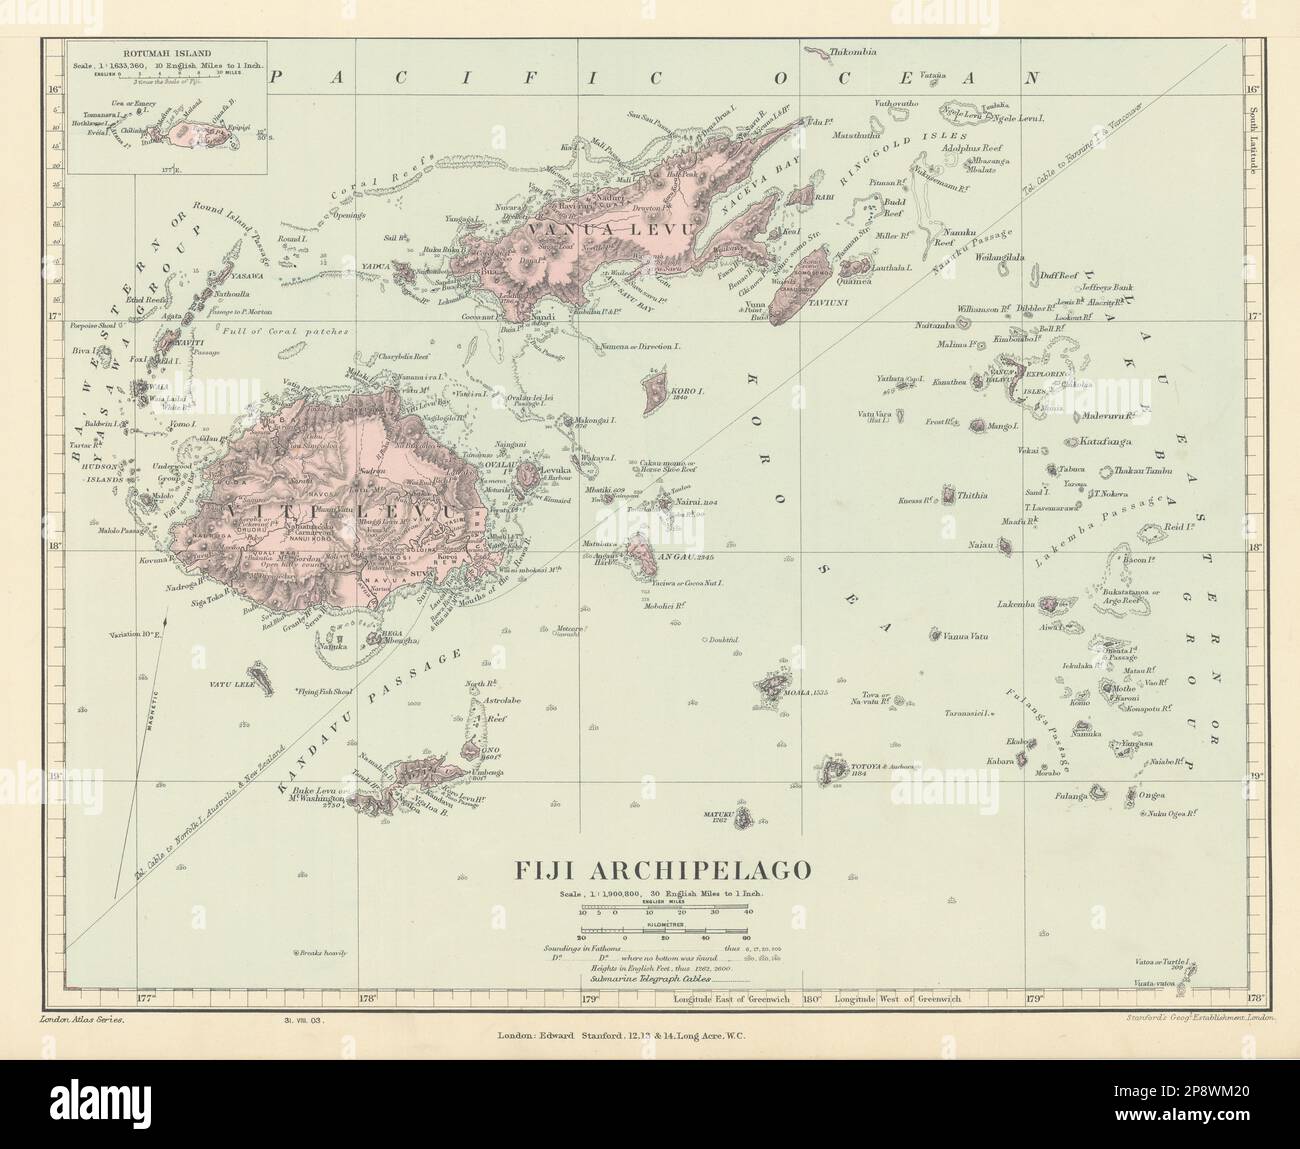 Tasmania / Fiji Archipelago. Vanua Levu. Viti Levu. STANFORD 1904 old map Stock Photo